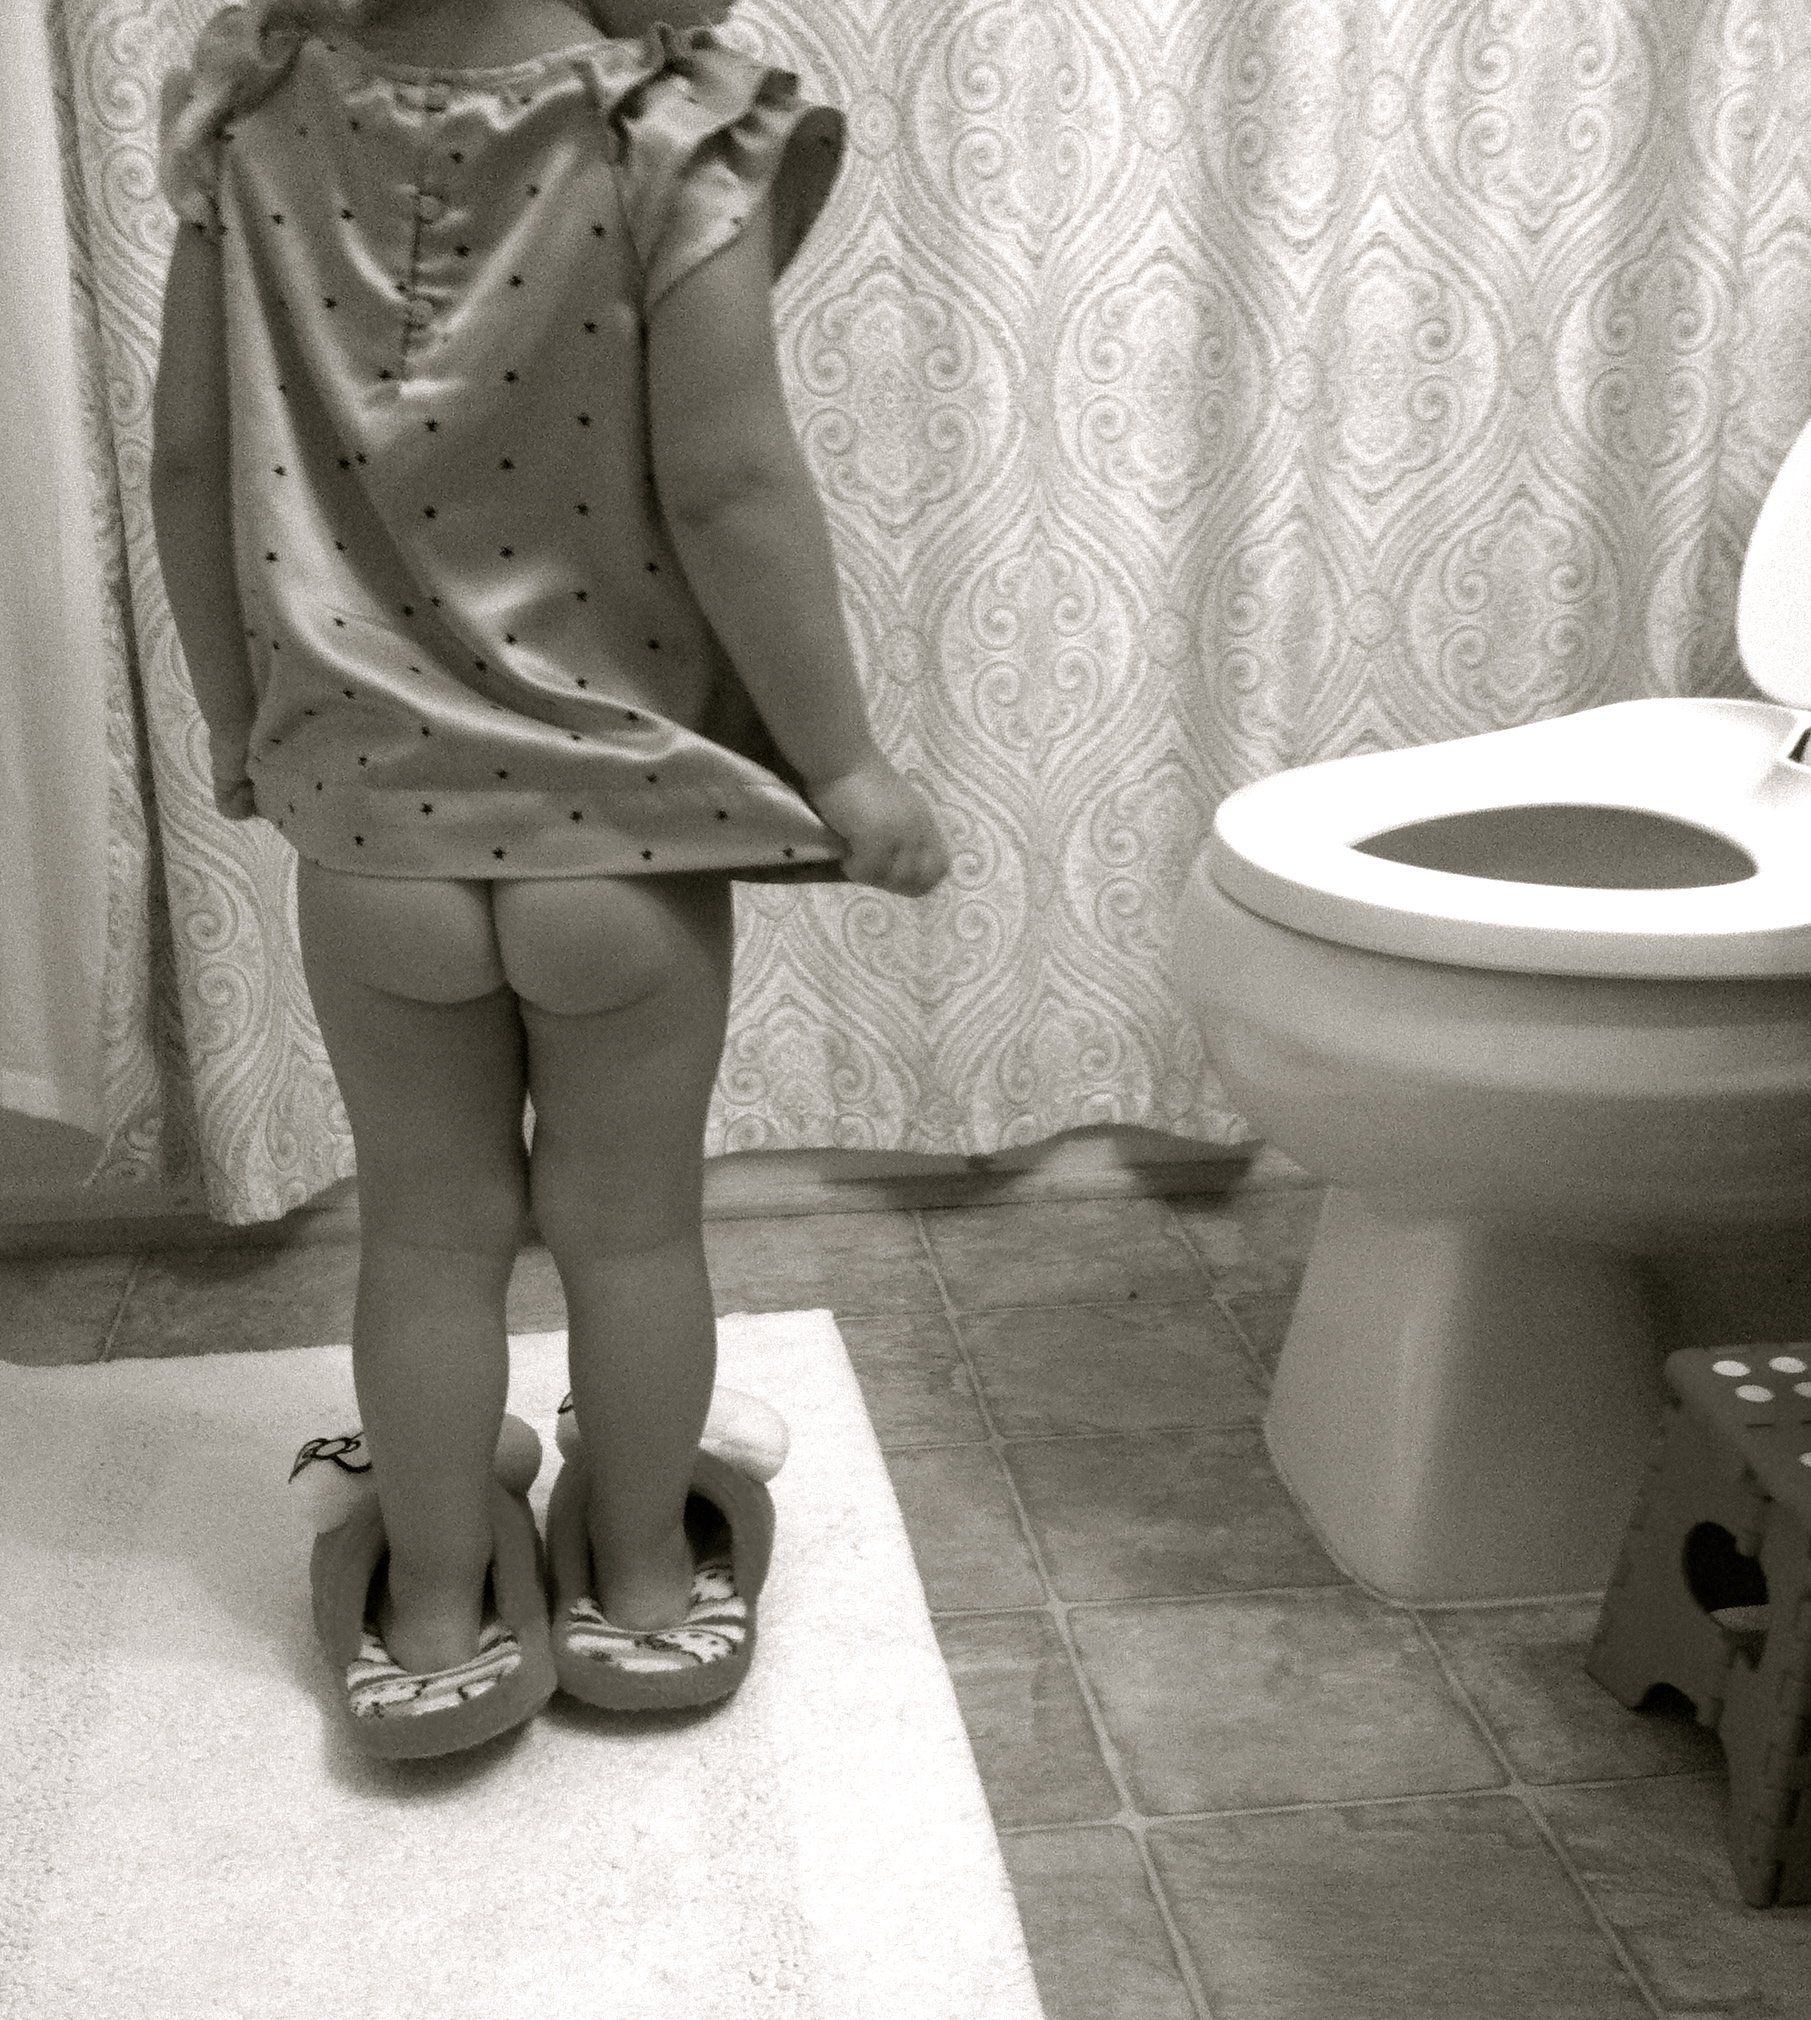 Judge reccomend Little girl nude toilet